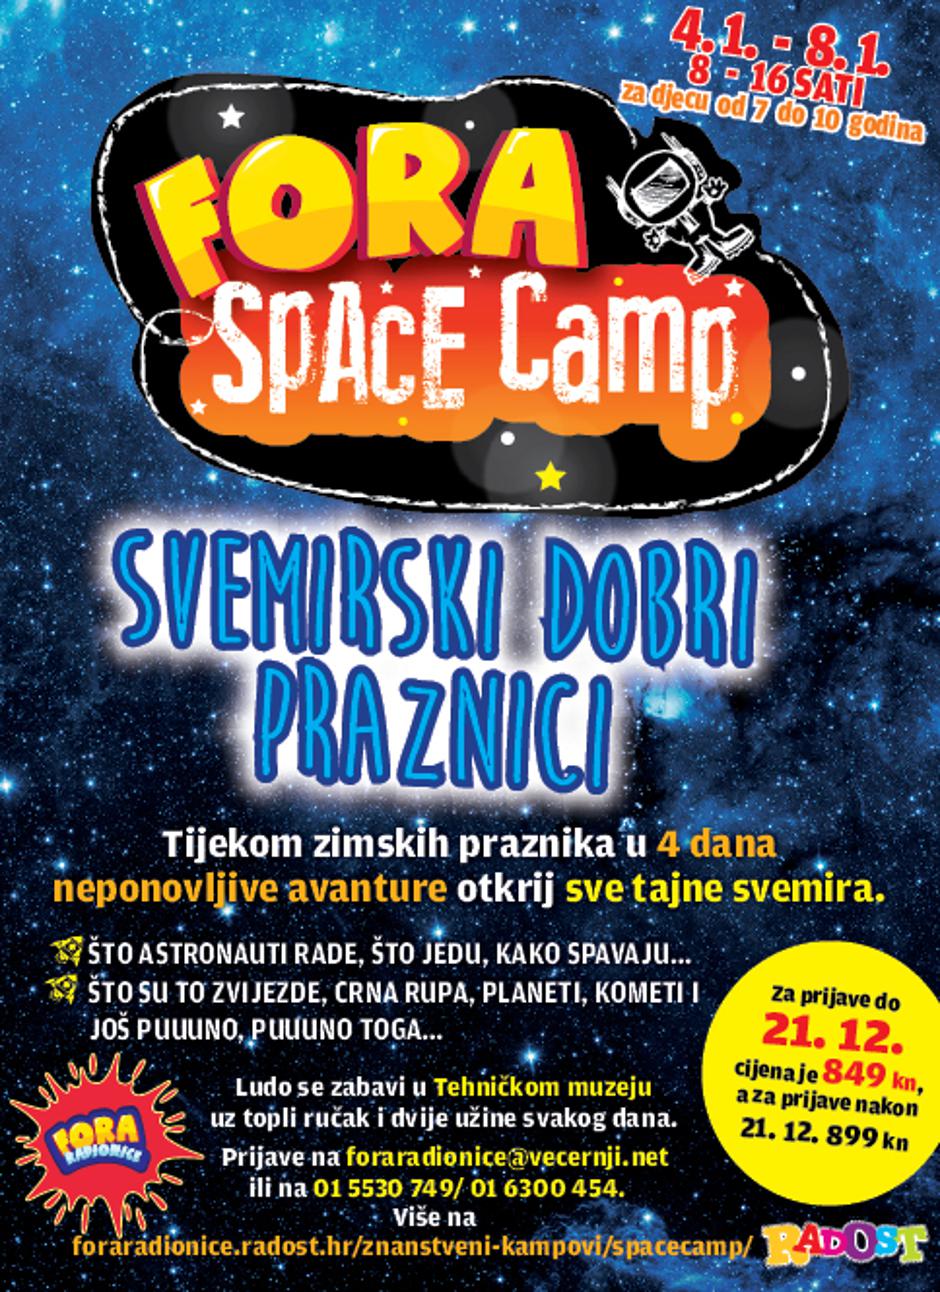 Fora Space camp